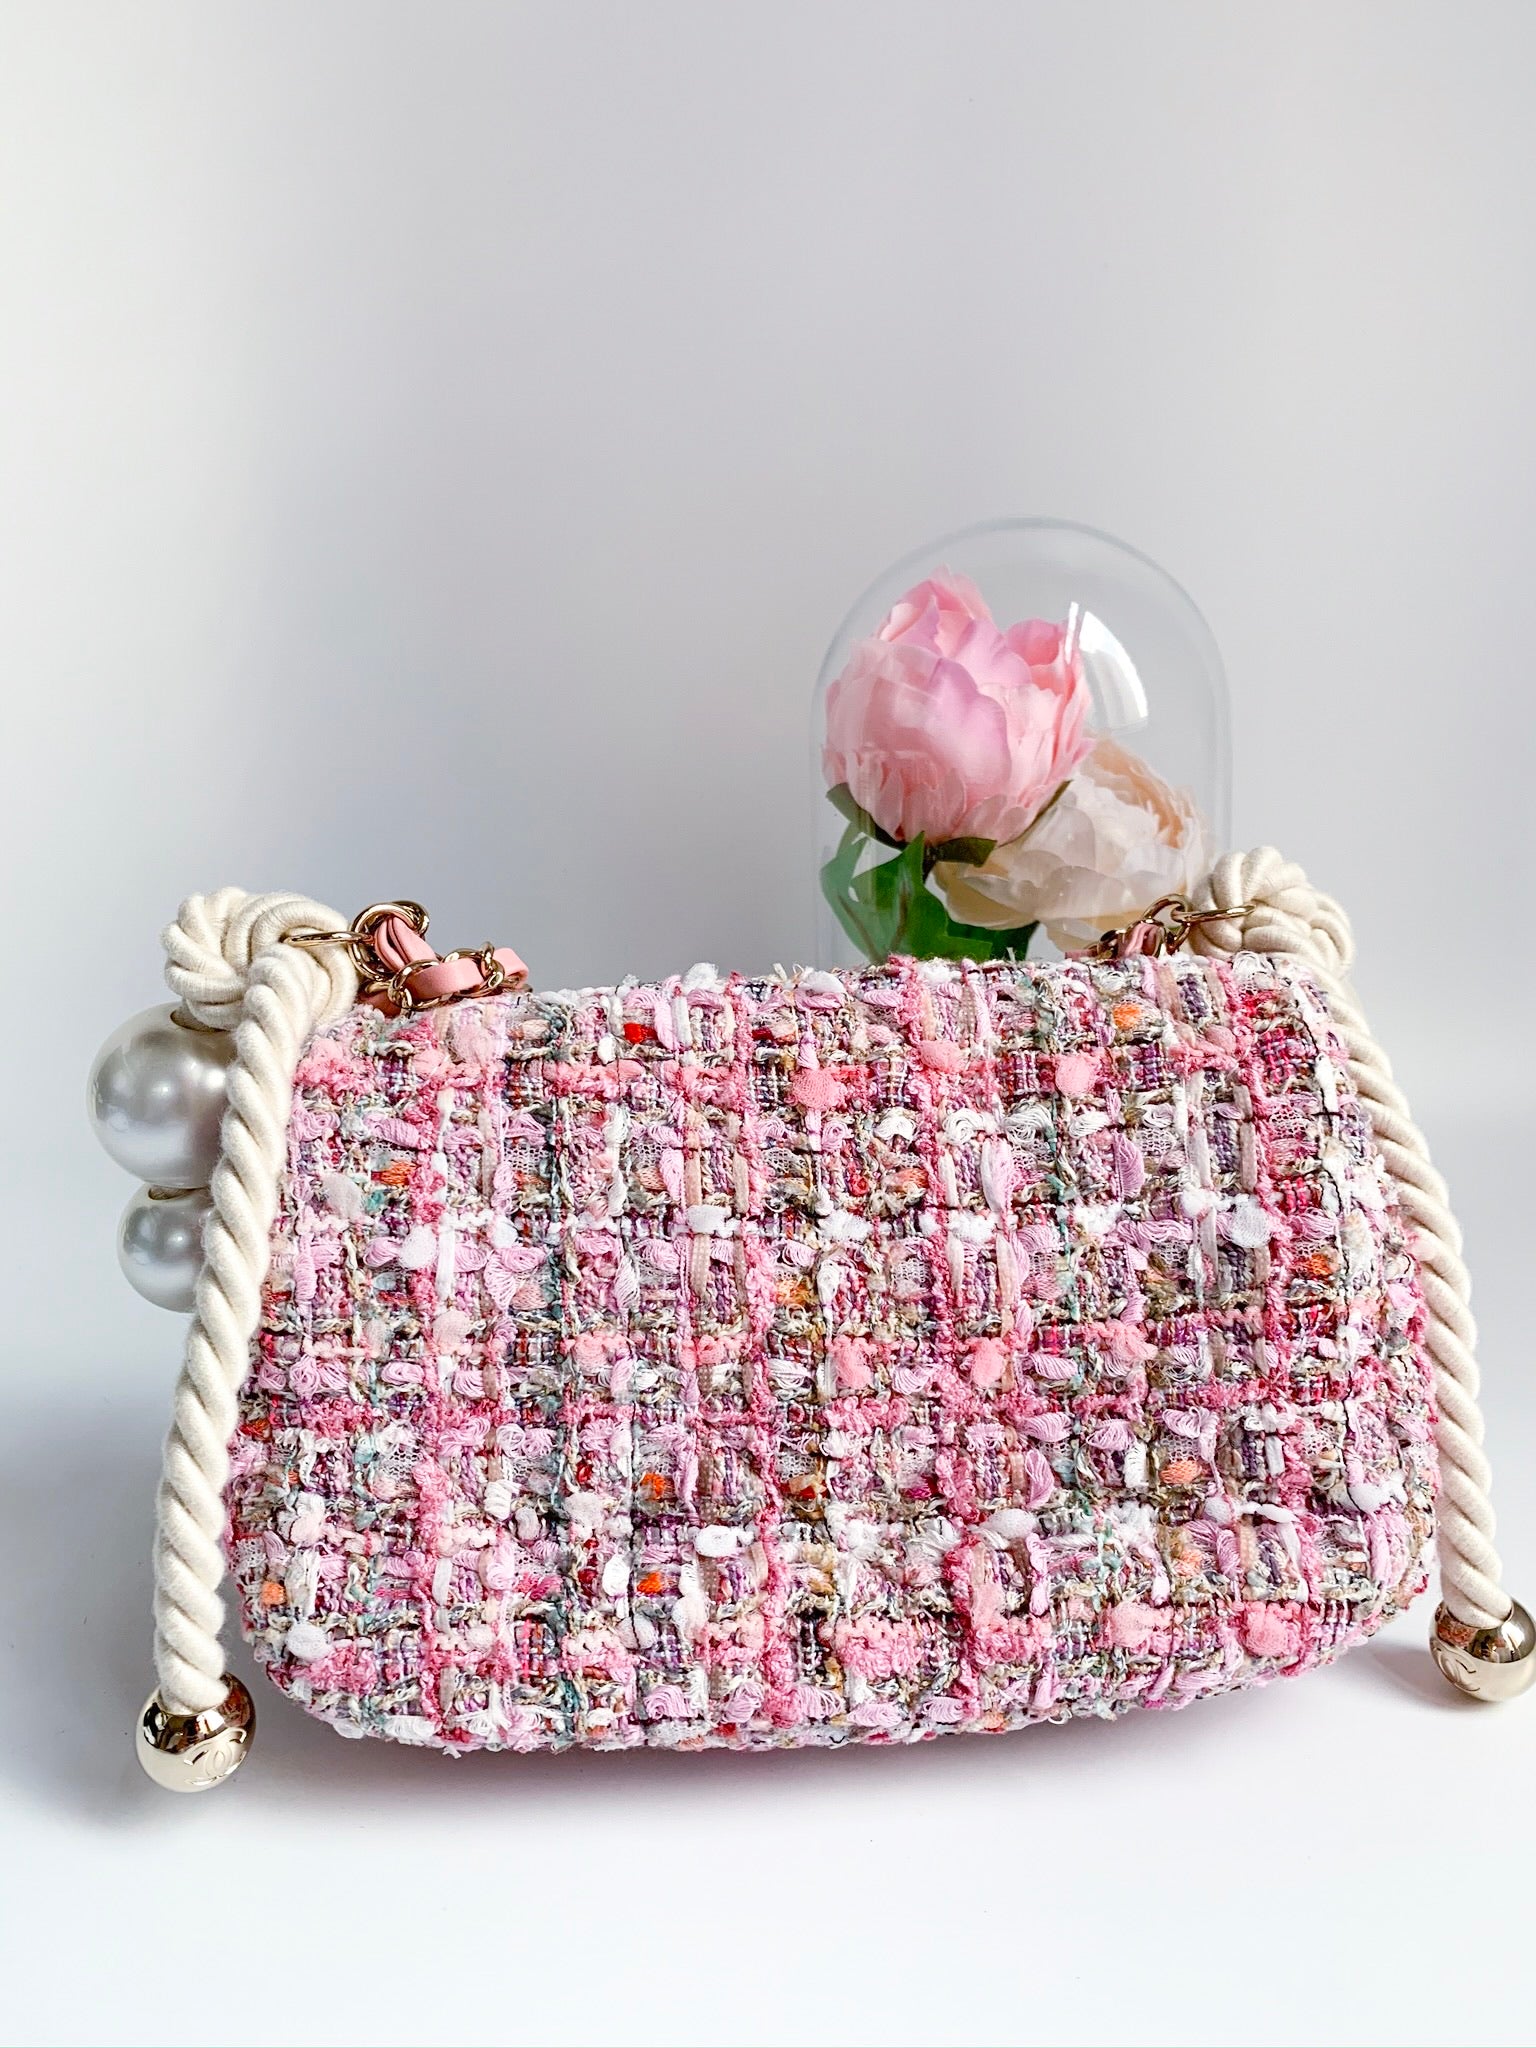 pink chanel pearl bag